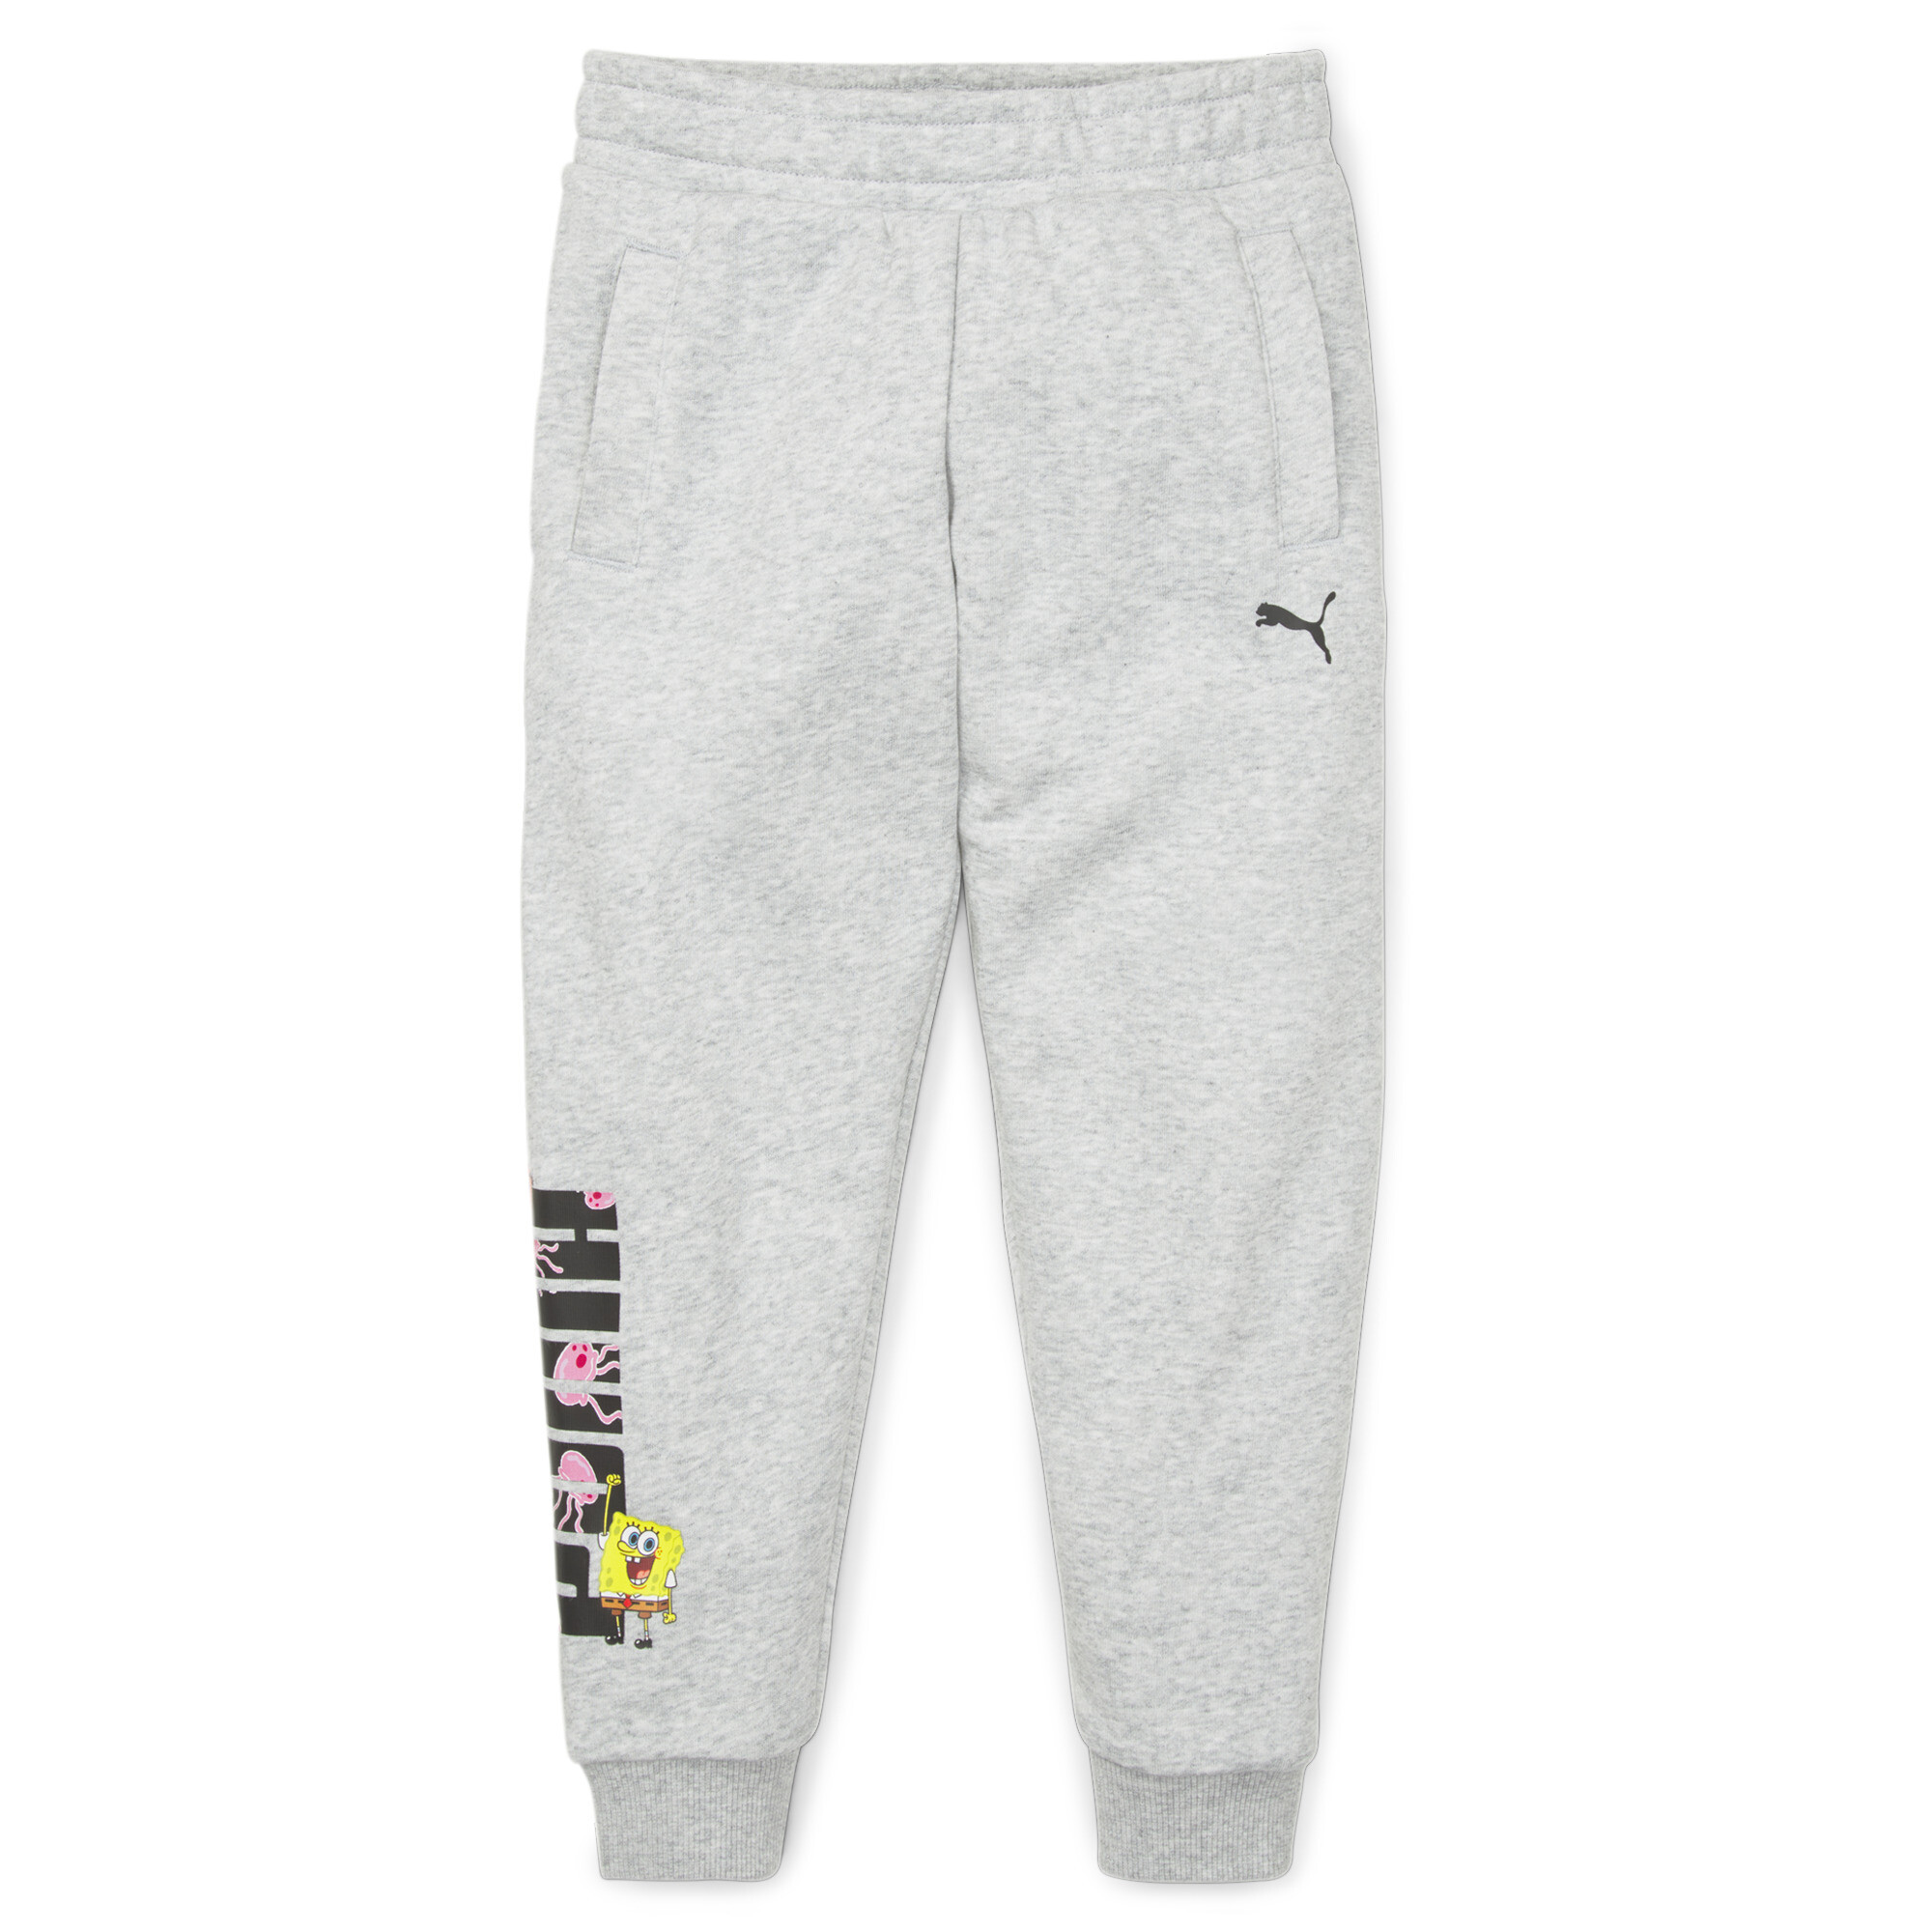 Puma X SPONGEBOB Sweatpants Kids, Gray, Size 5-6Y, Clothing